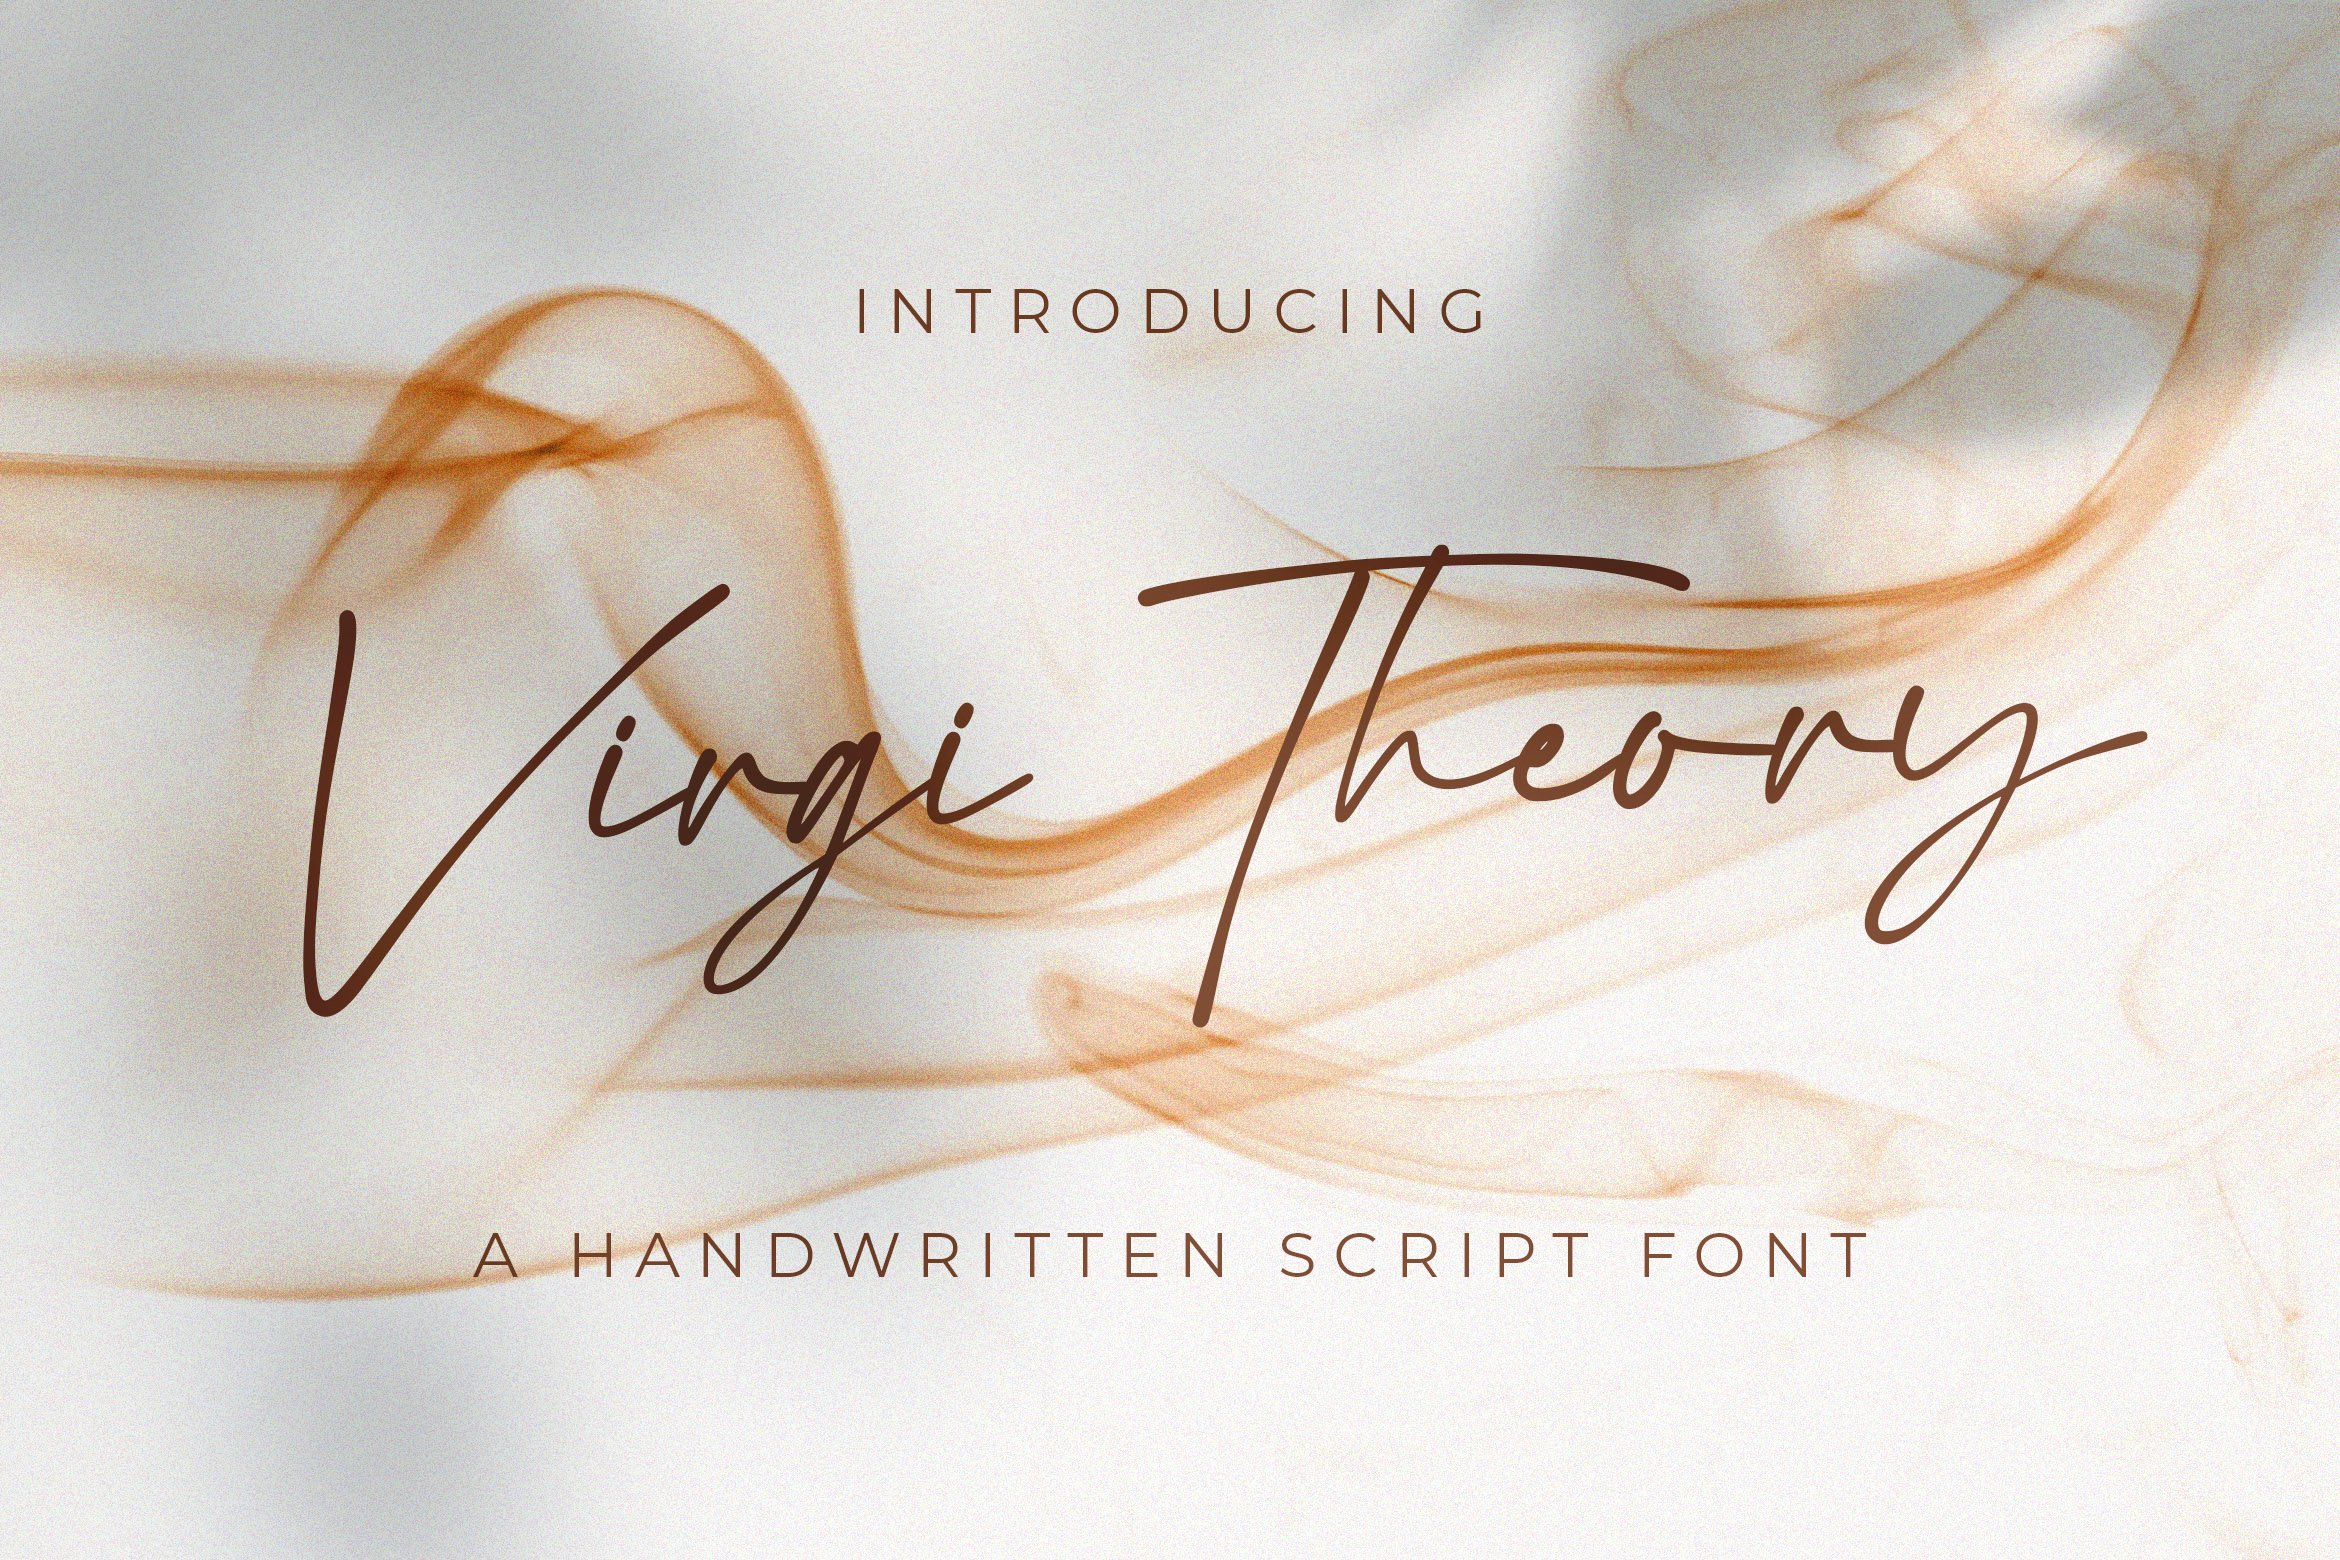 Virgi Theory - Handwritten Font cover image.